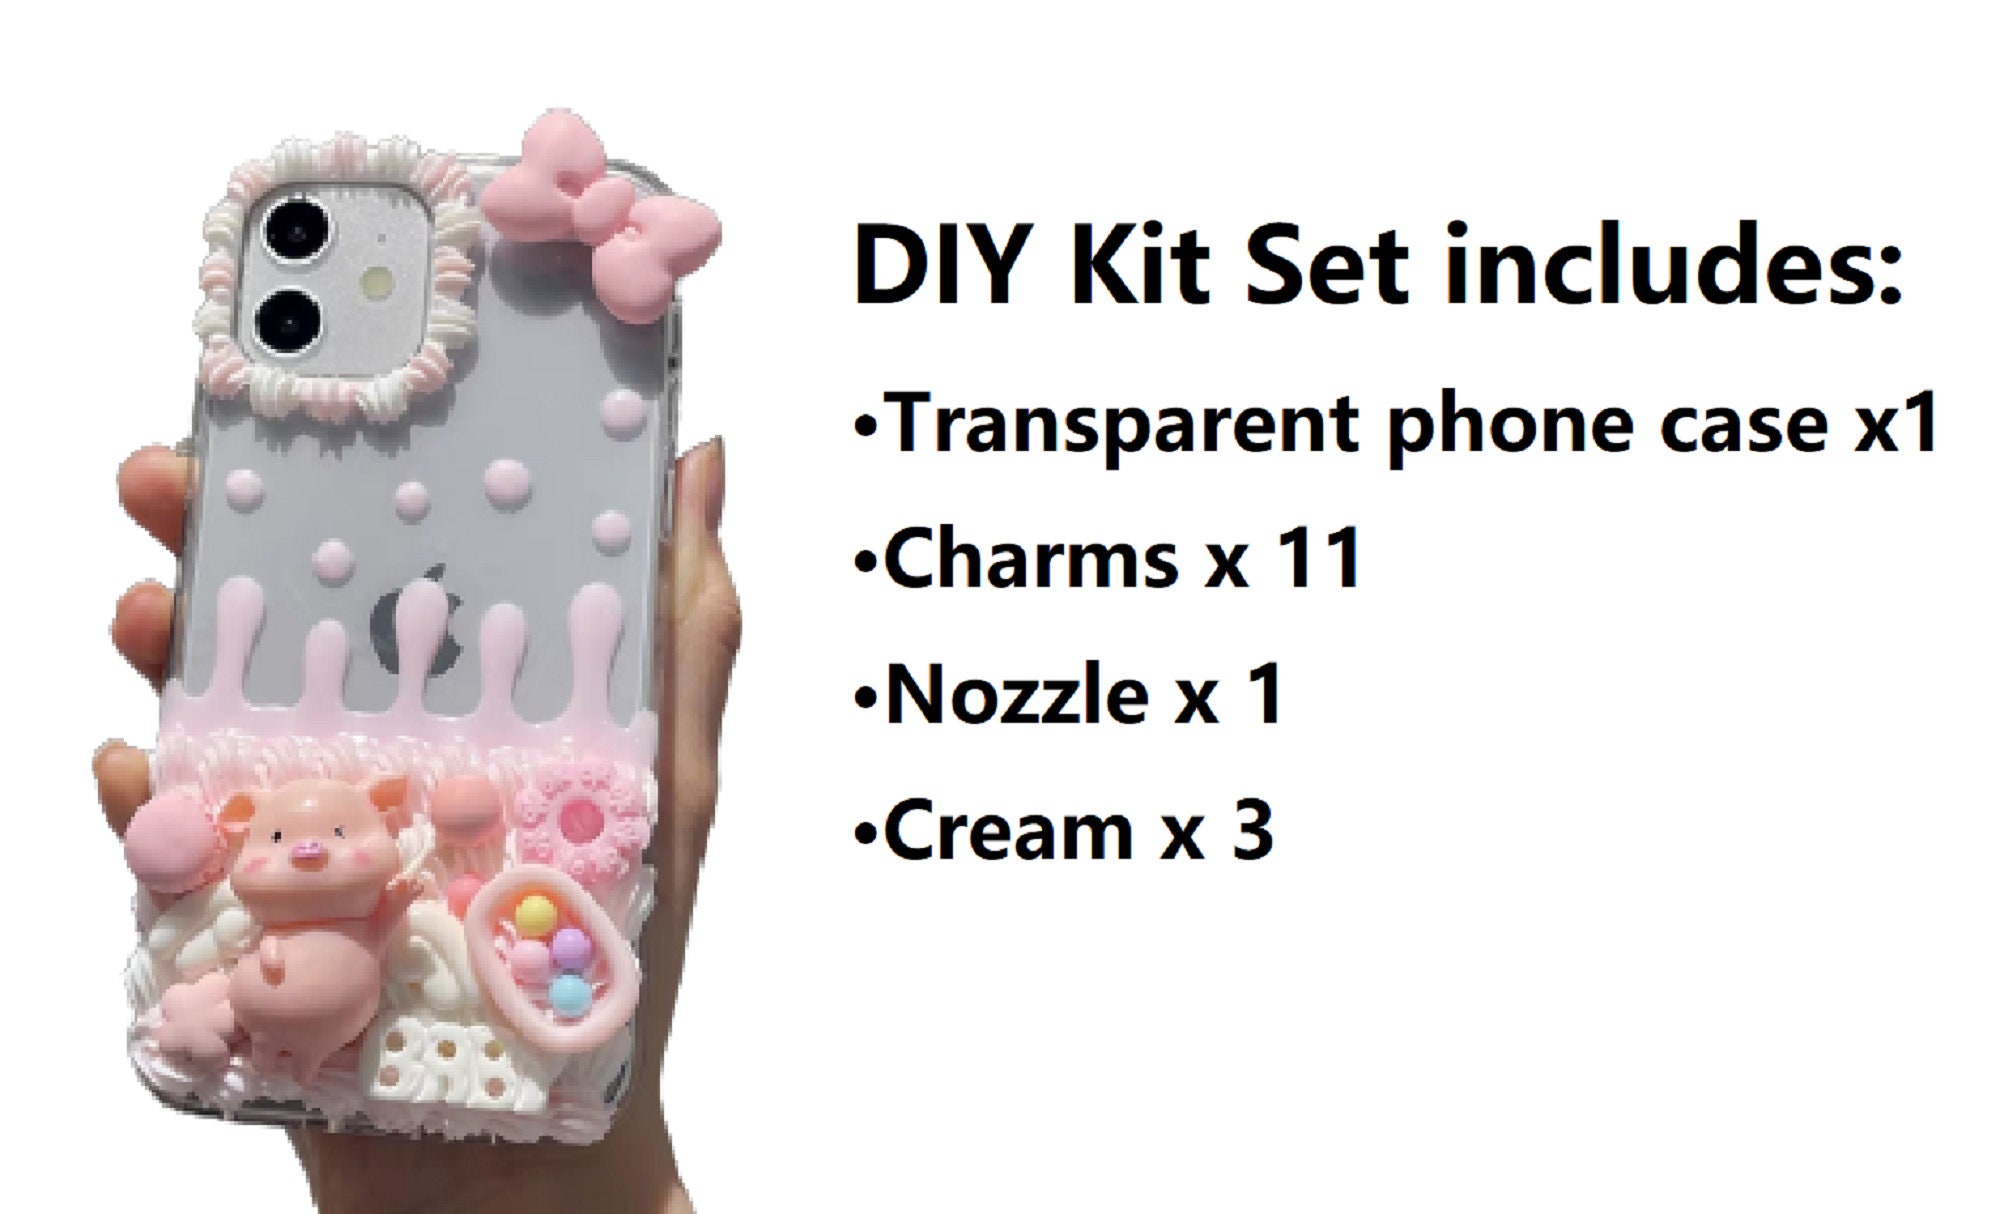 DIY KIT - Princess hare decoden phone case kit